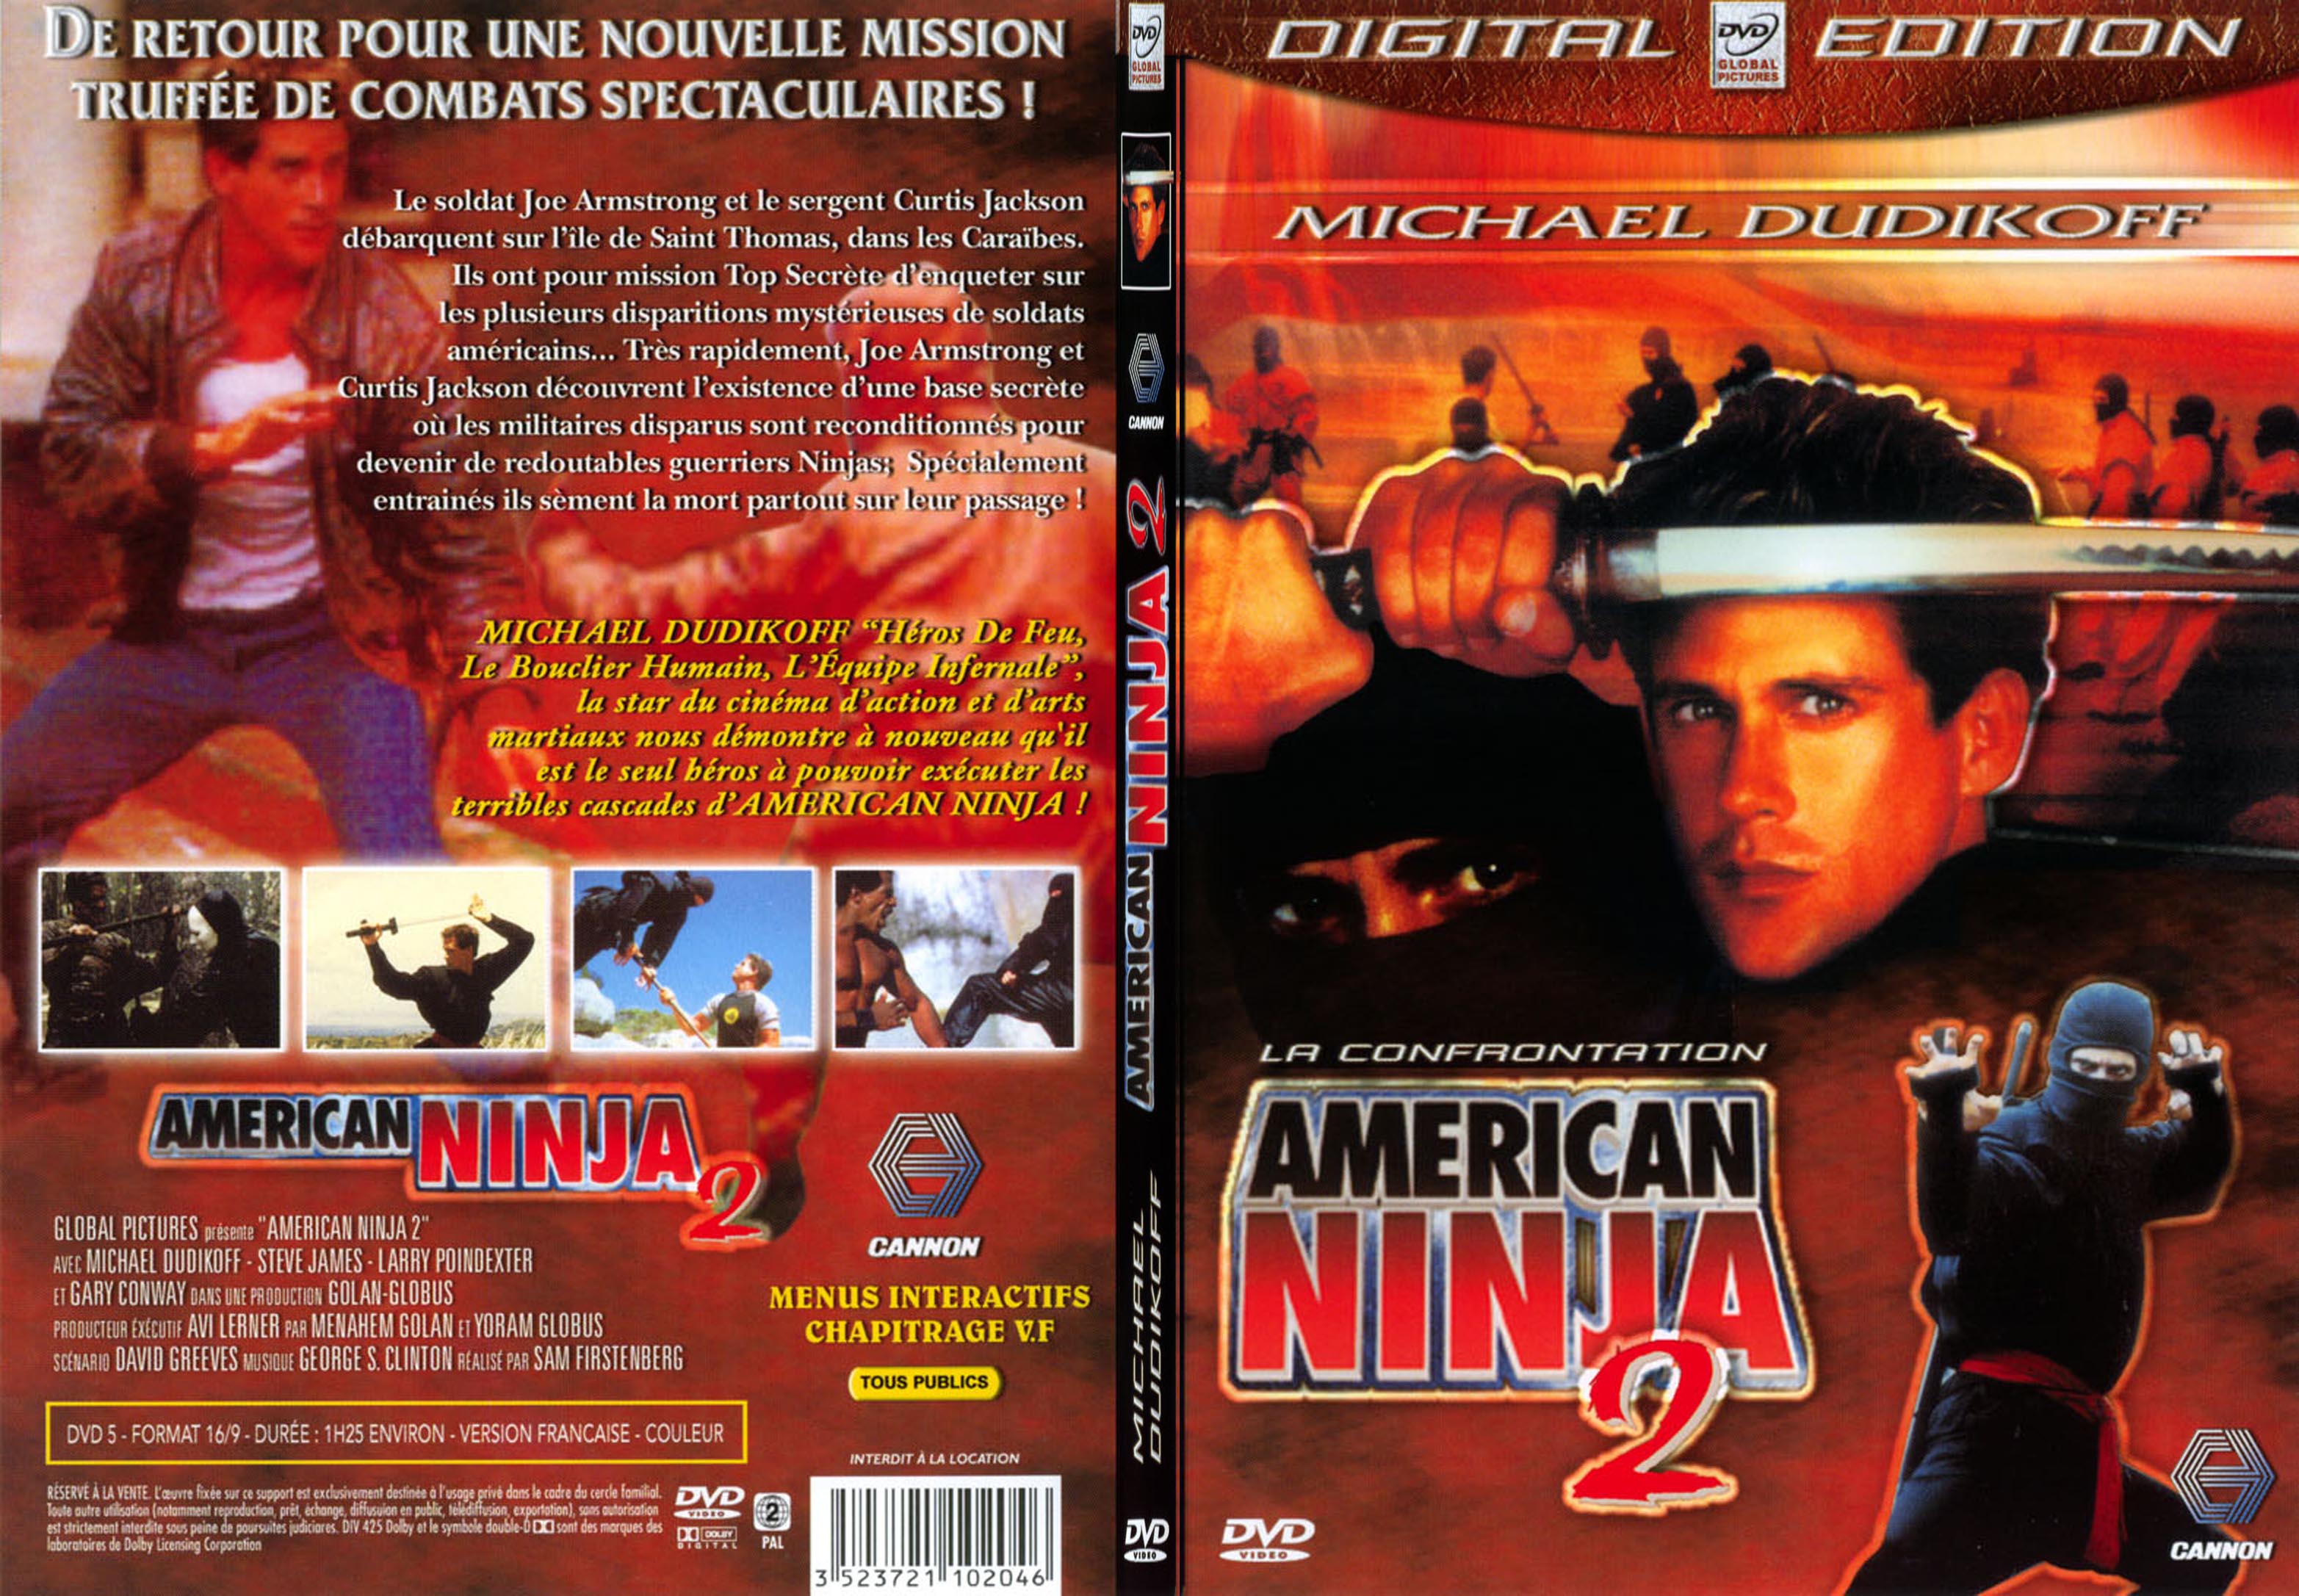 Jaquette DVD American ninja 2 - SLIM